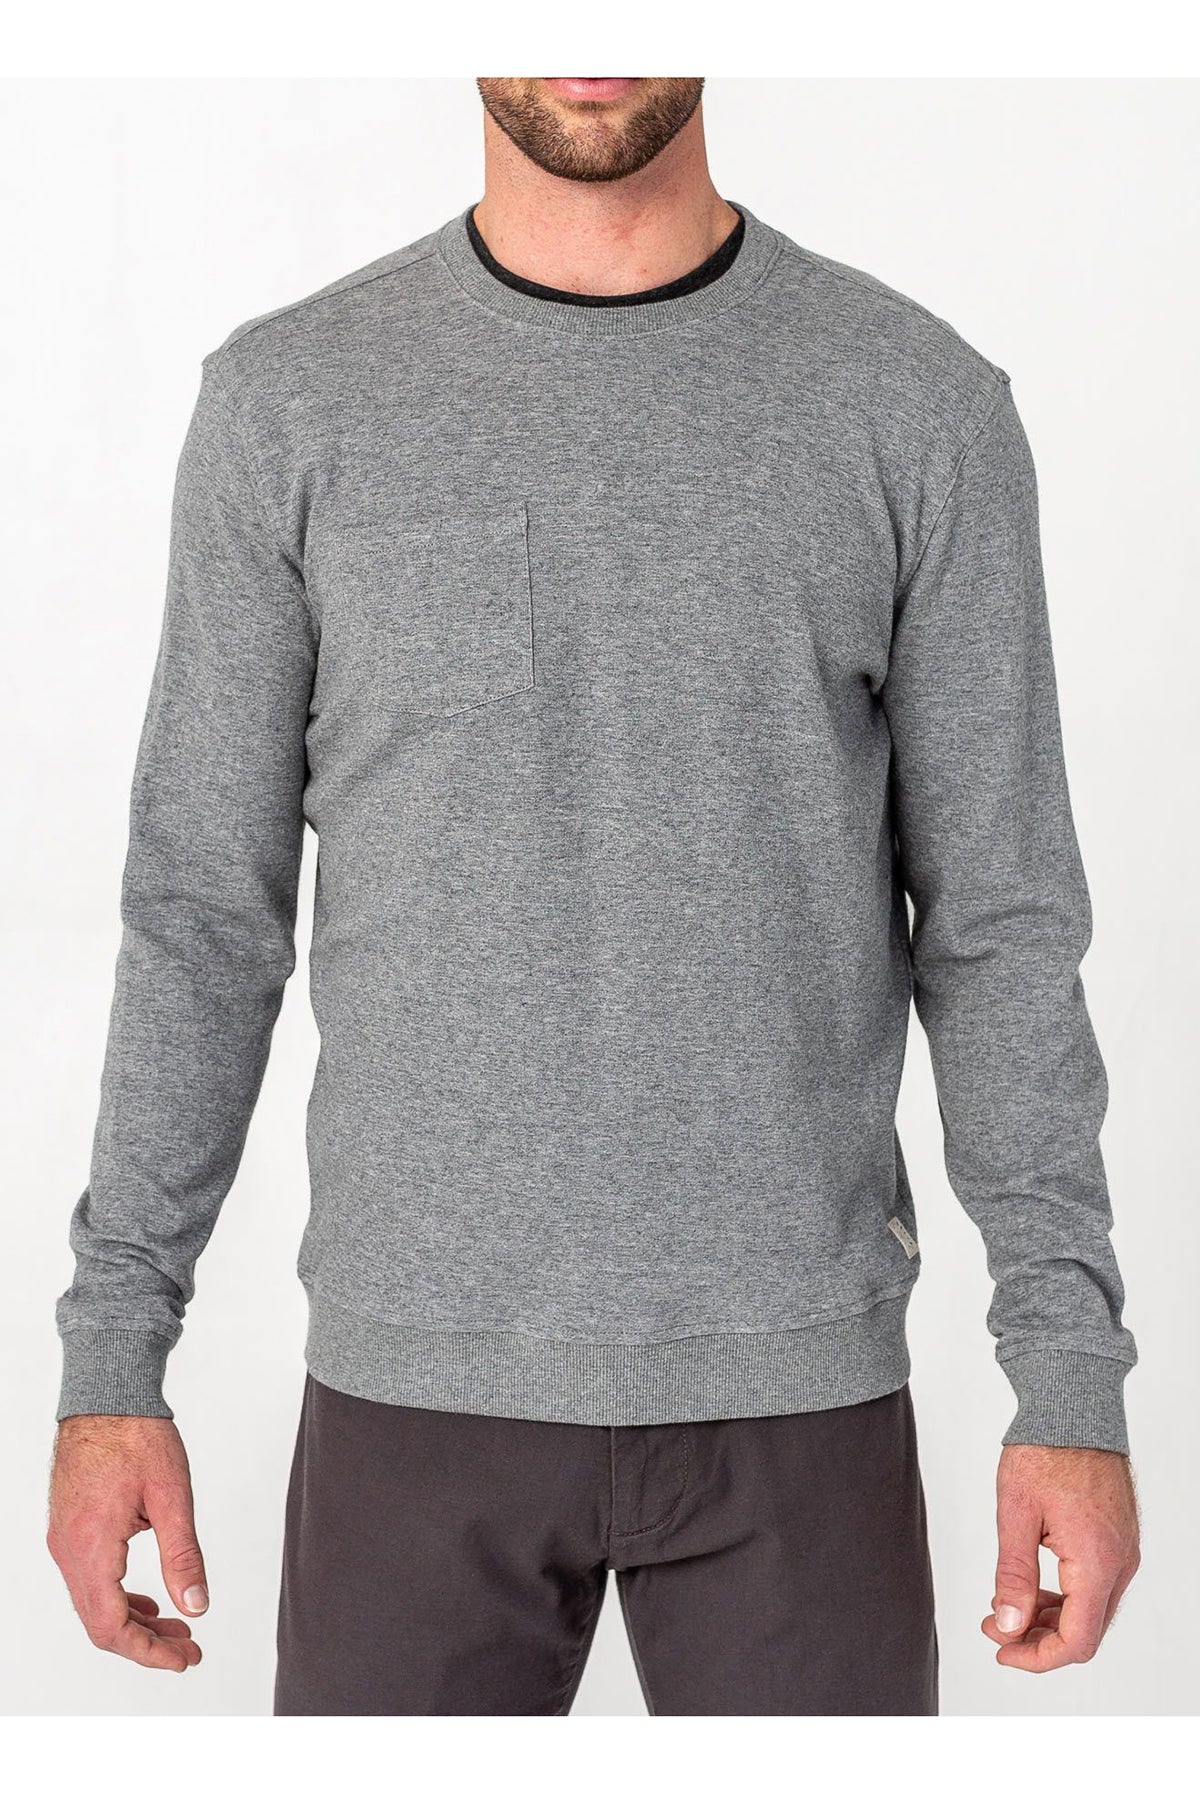 Linksoul Heather Grey LS490 custom business sweatshirts